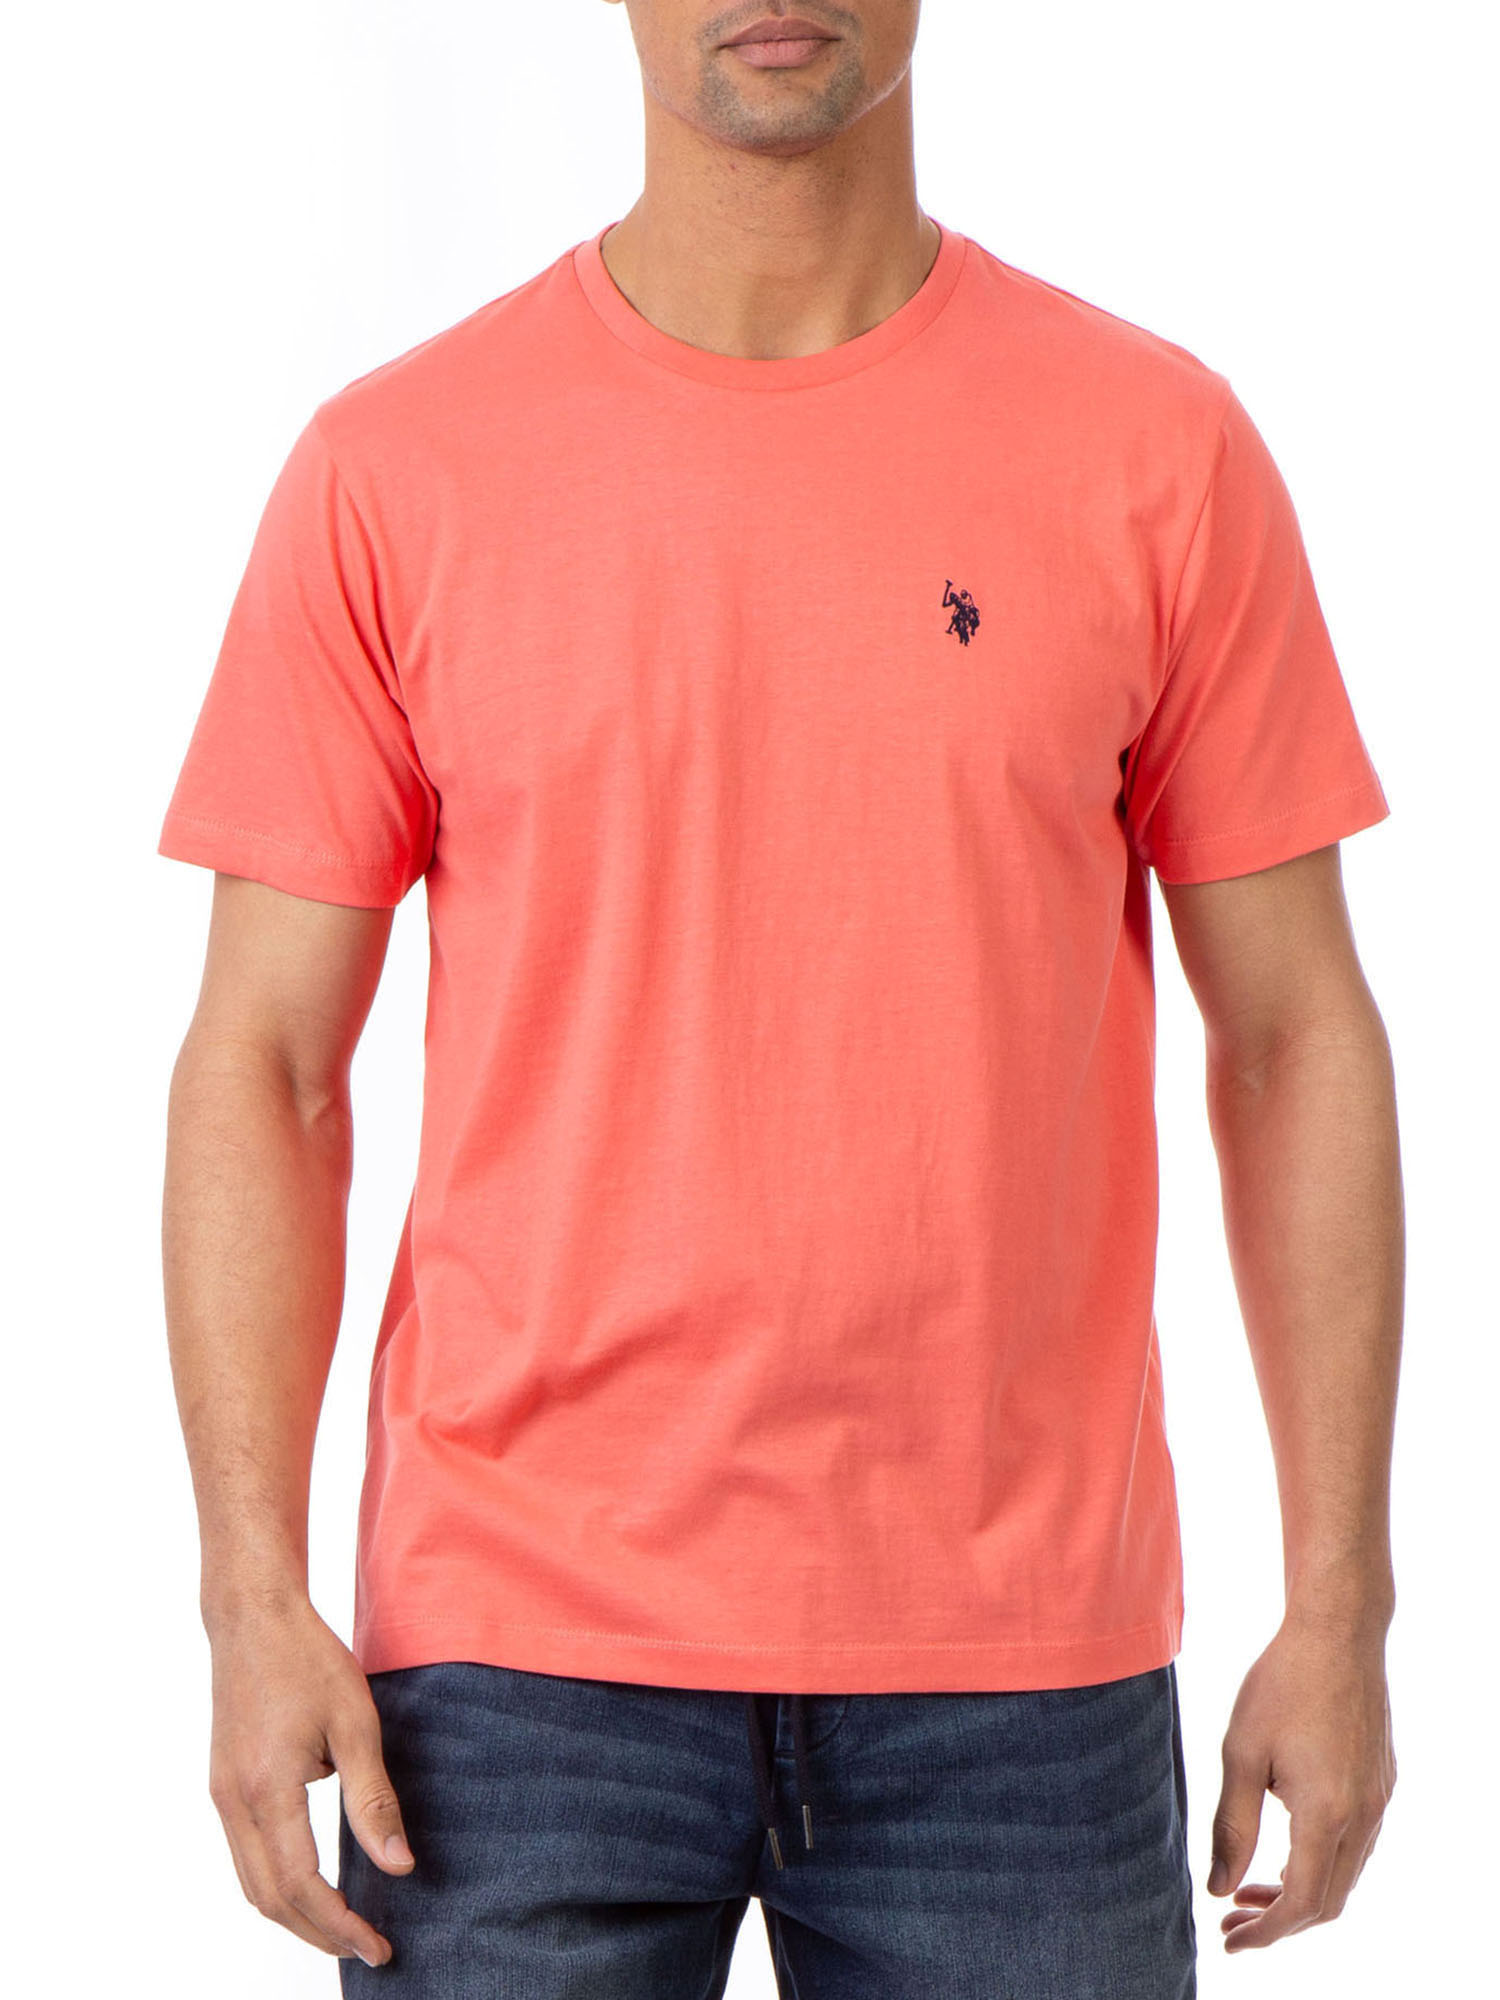 U.S. Polo Assn. Men's Short Sleeve Crew Neck T-Shirt - image 1 of 4